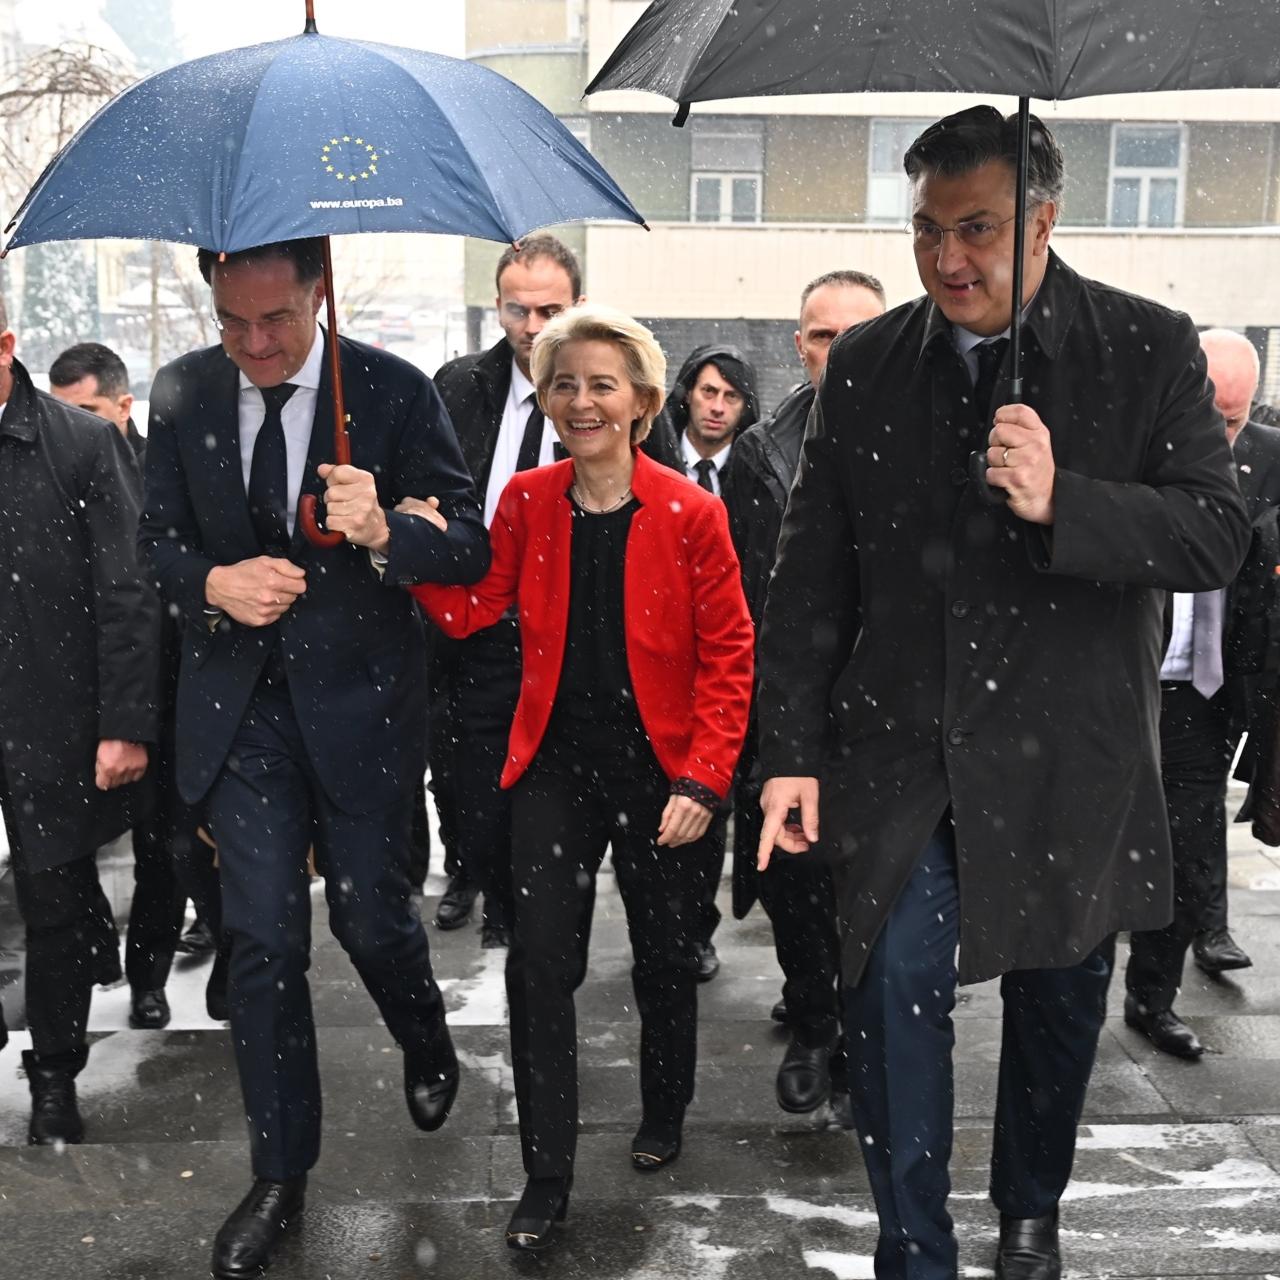 Nizozemskim premijer Mark Rutte, predsjednica Europskog povjerenstva Ursula von der Leyen i hrvatski premijer Andrej Plenković - Ursula von der Leyen: Budućnost BiH je u EU 